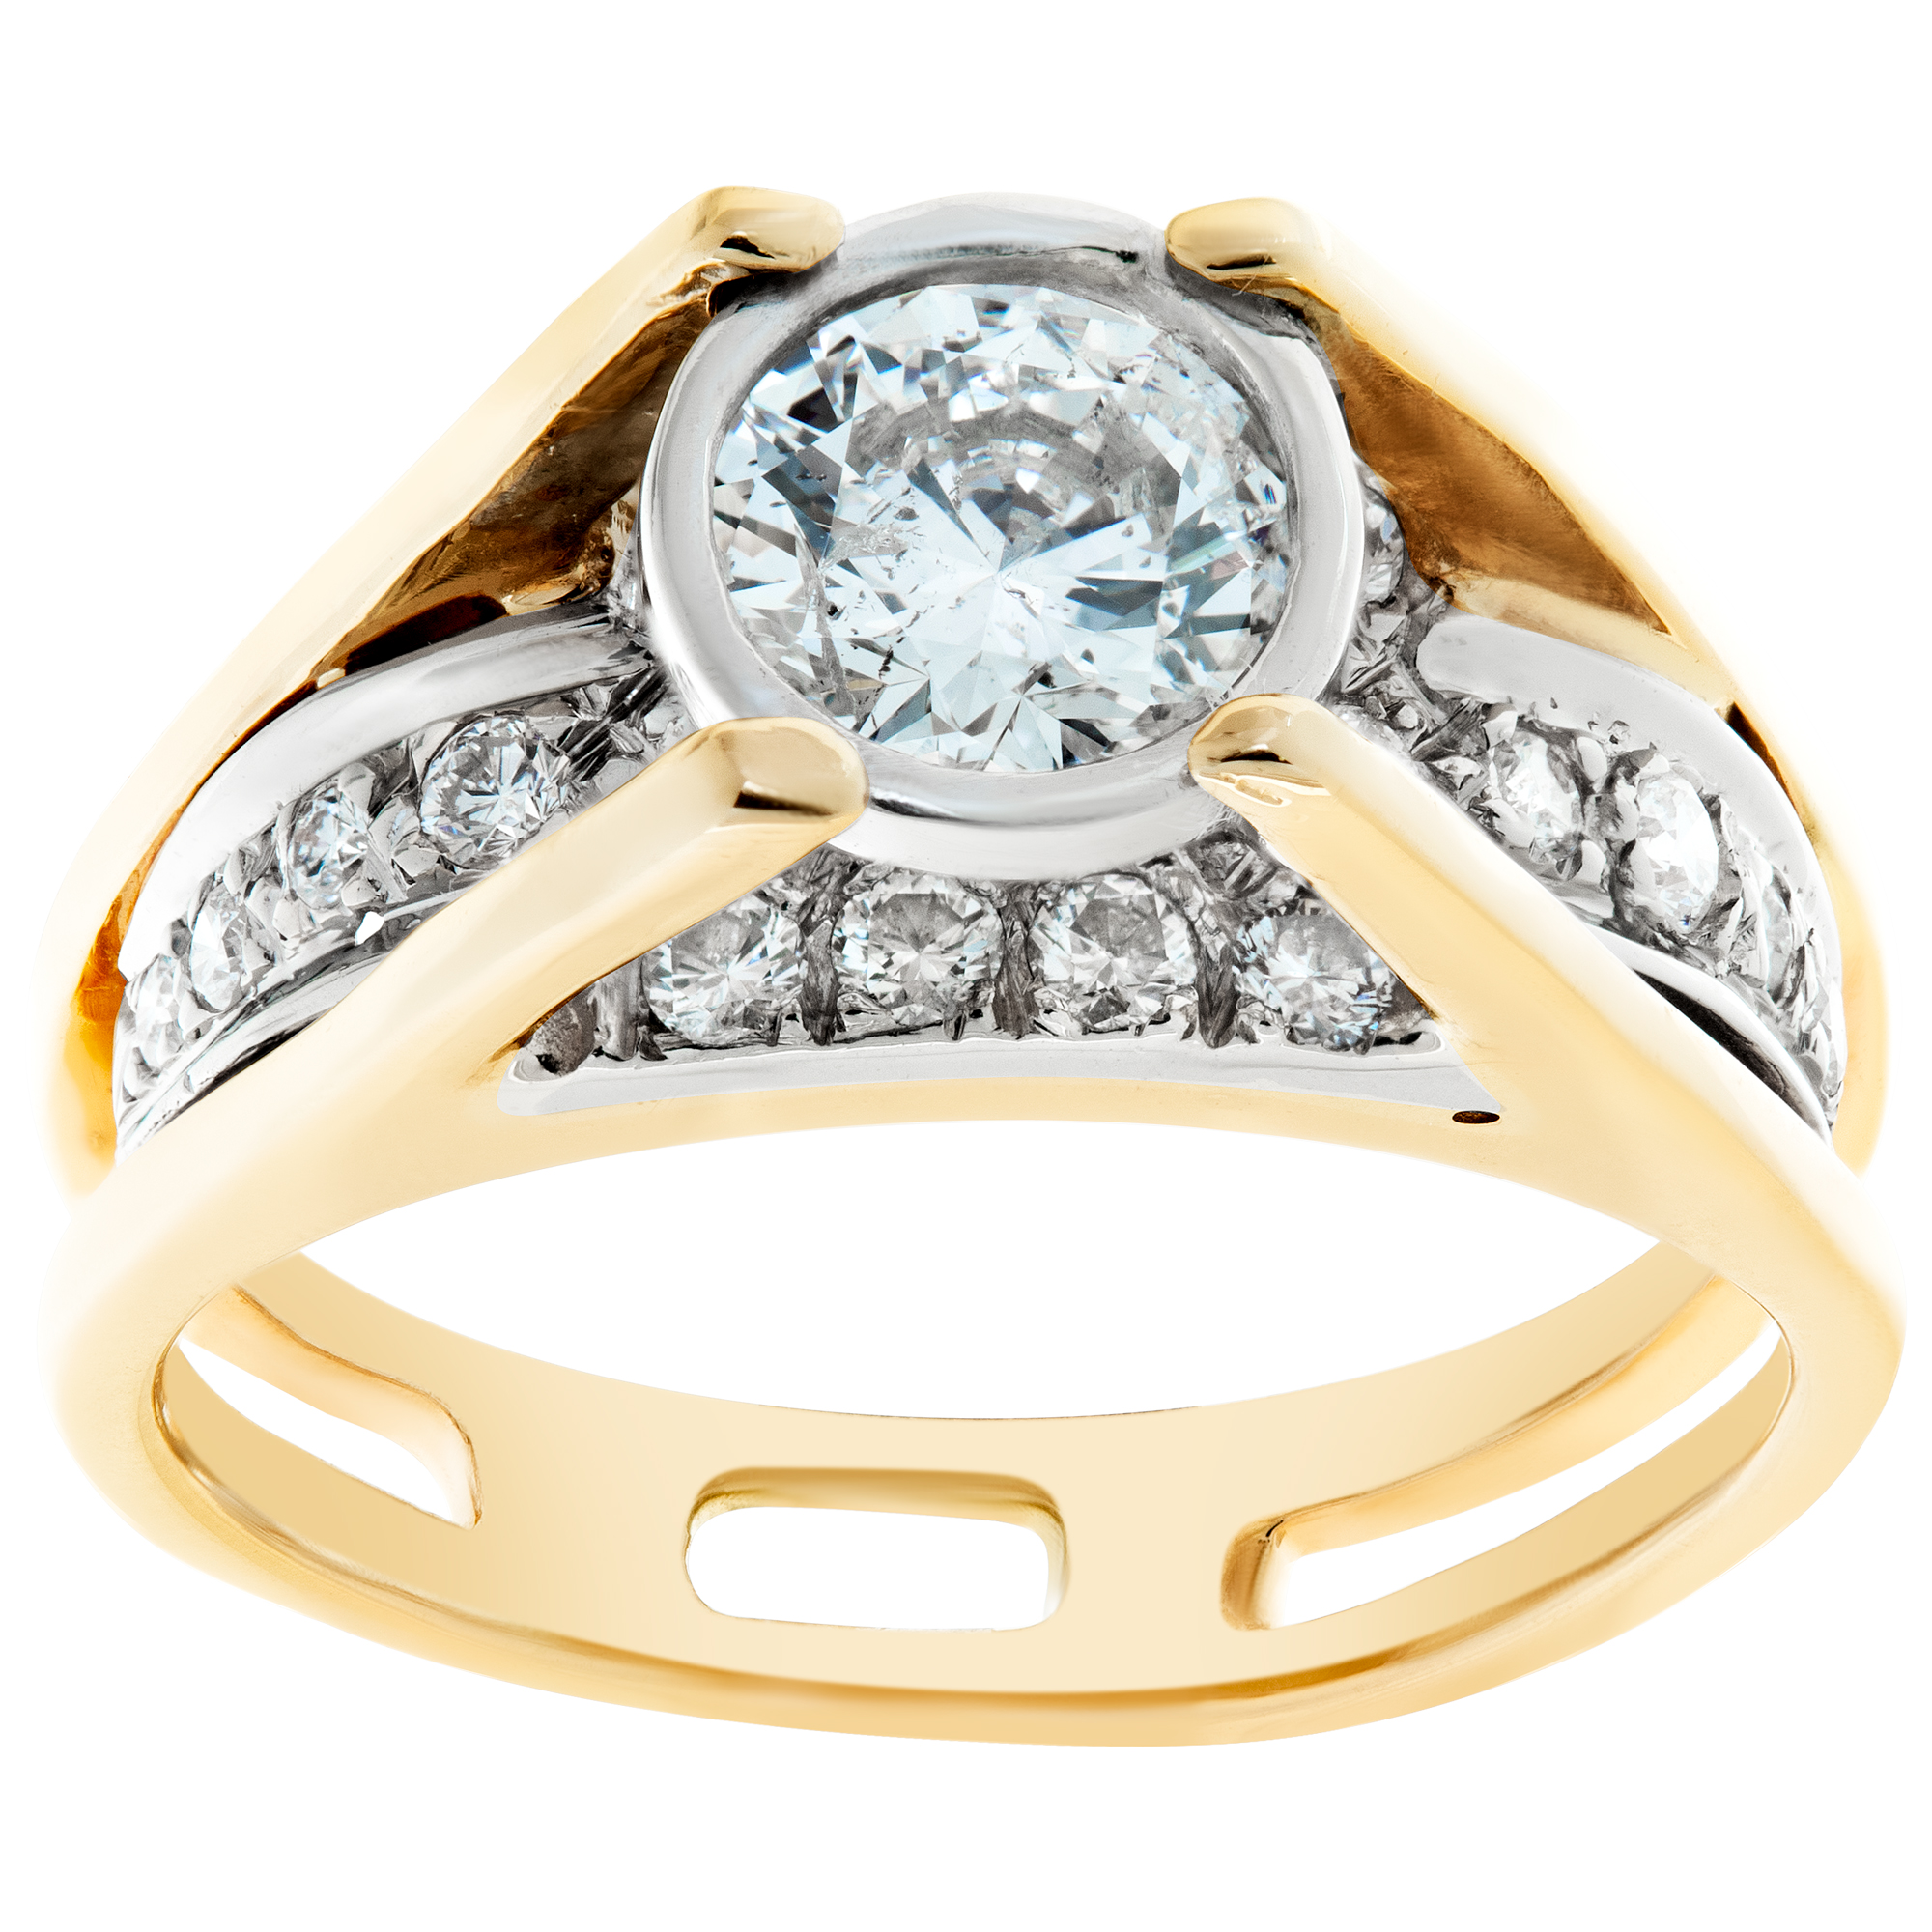 Bezel set approx. 0.65 carat H-I color, SI-I clarity diamond ring image 1